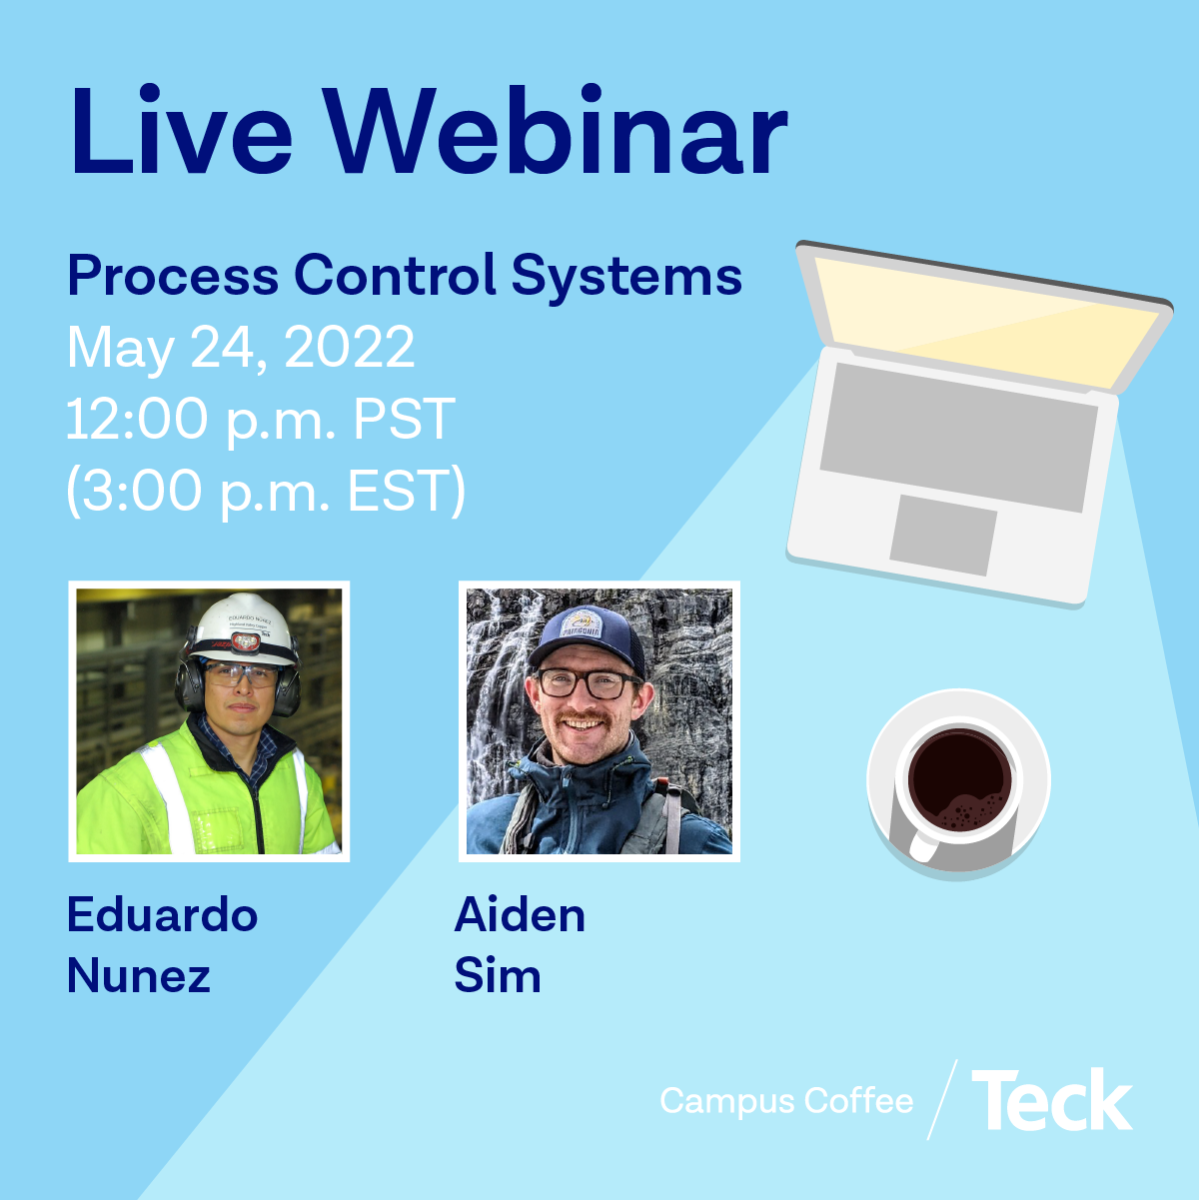 A poster of Process Control Systems Live Webinar with Eduardo Nunez and Aiden Sim